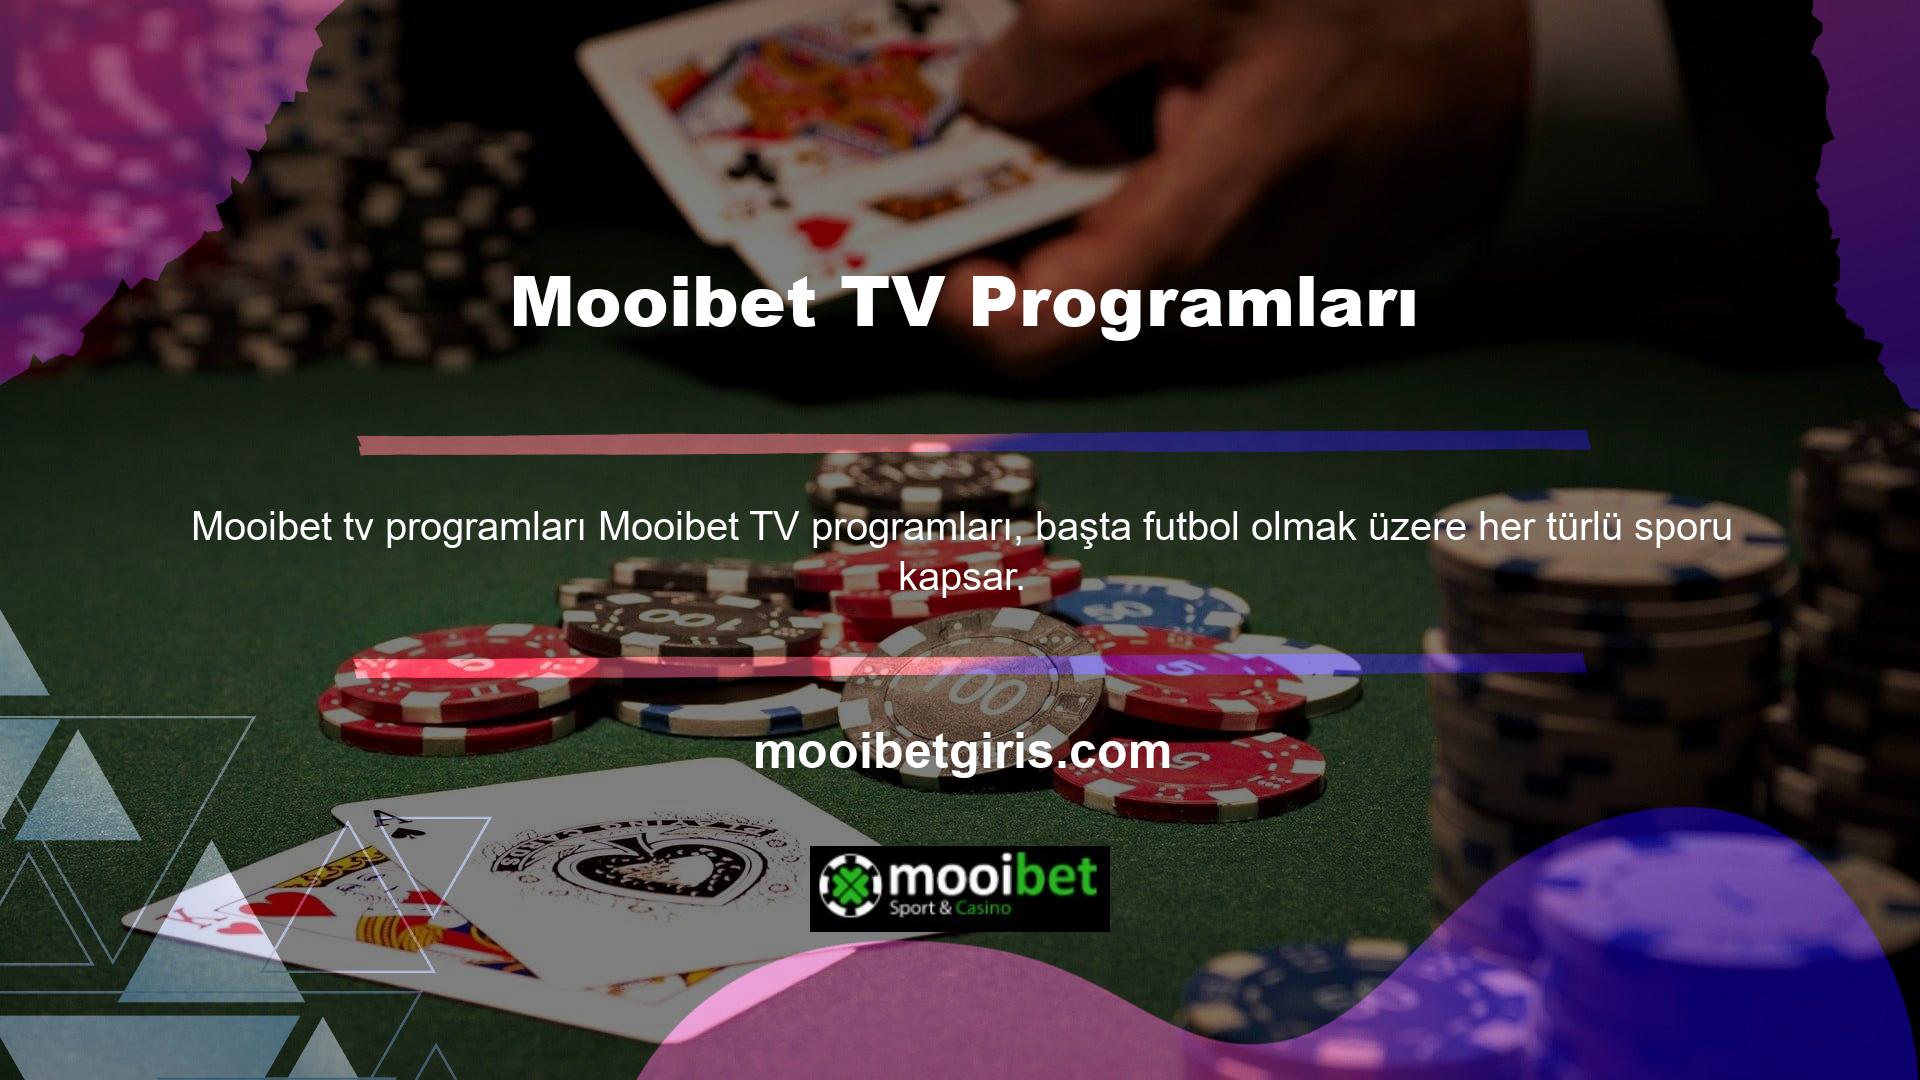 Mooibet TV Programları